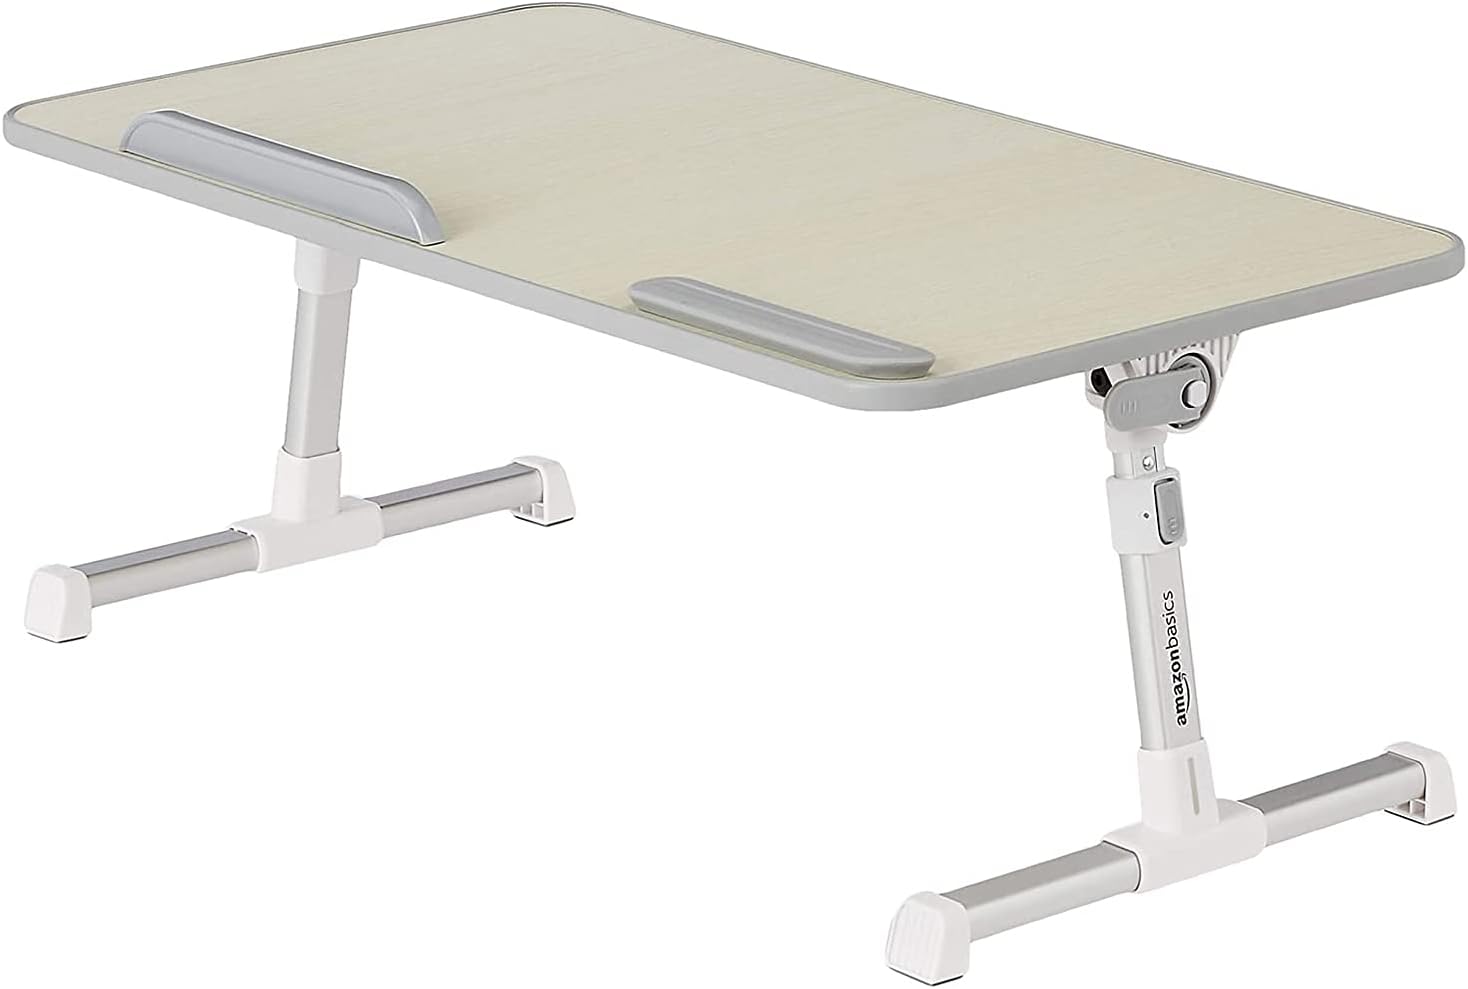 Amazon Basics Adjustable Tray Table Lap Desk Fits up [...]